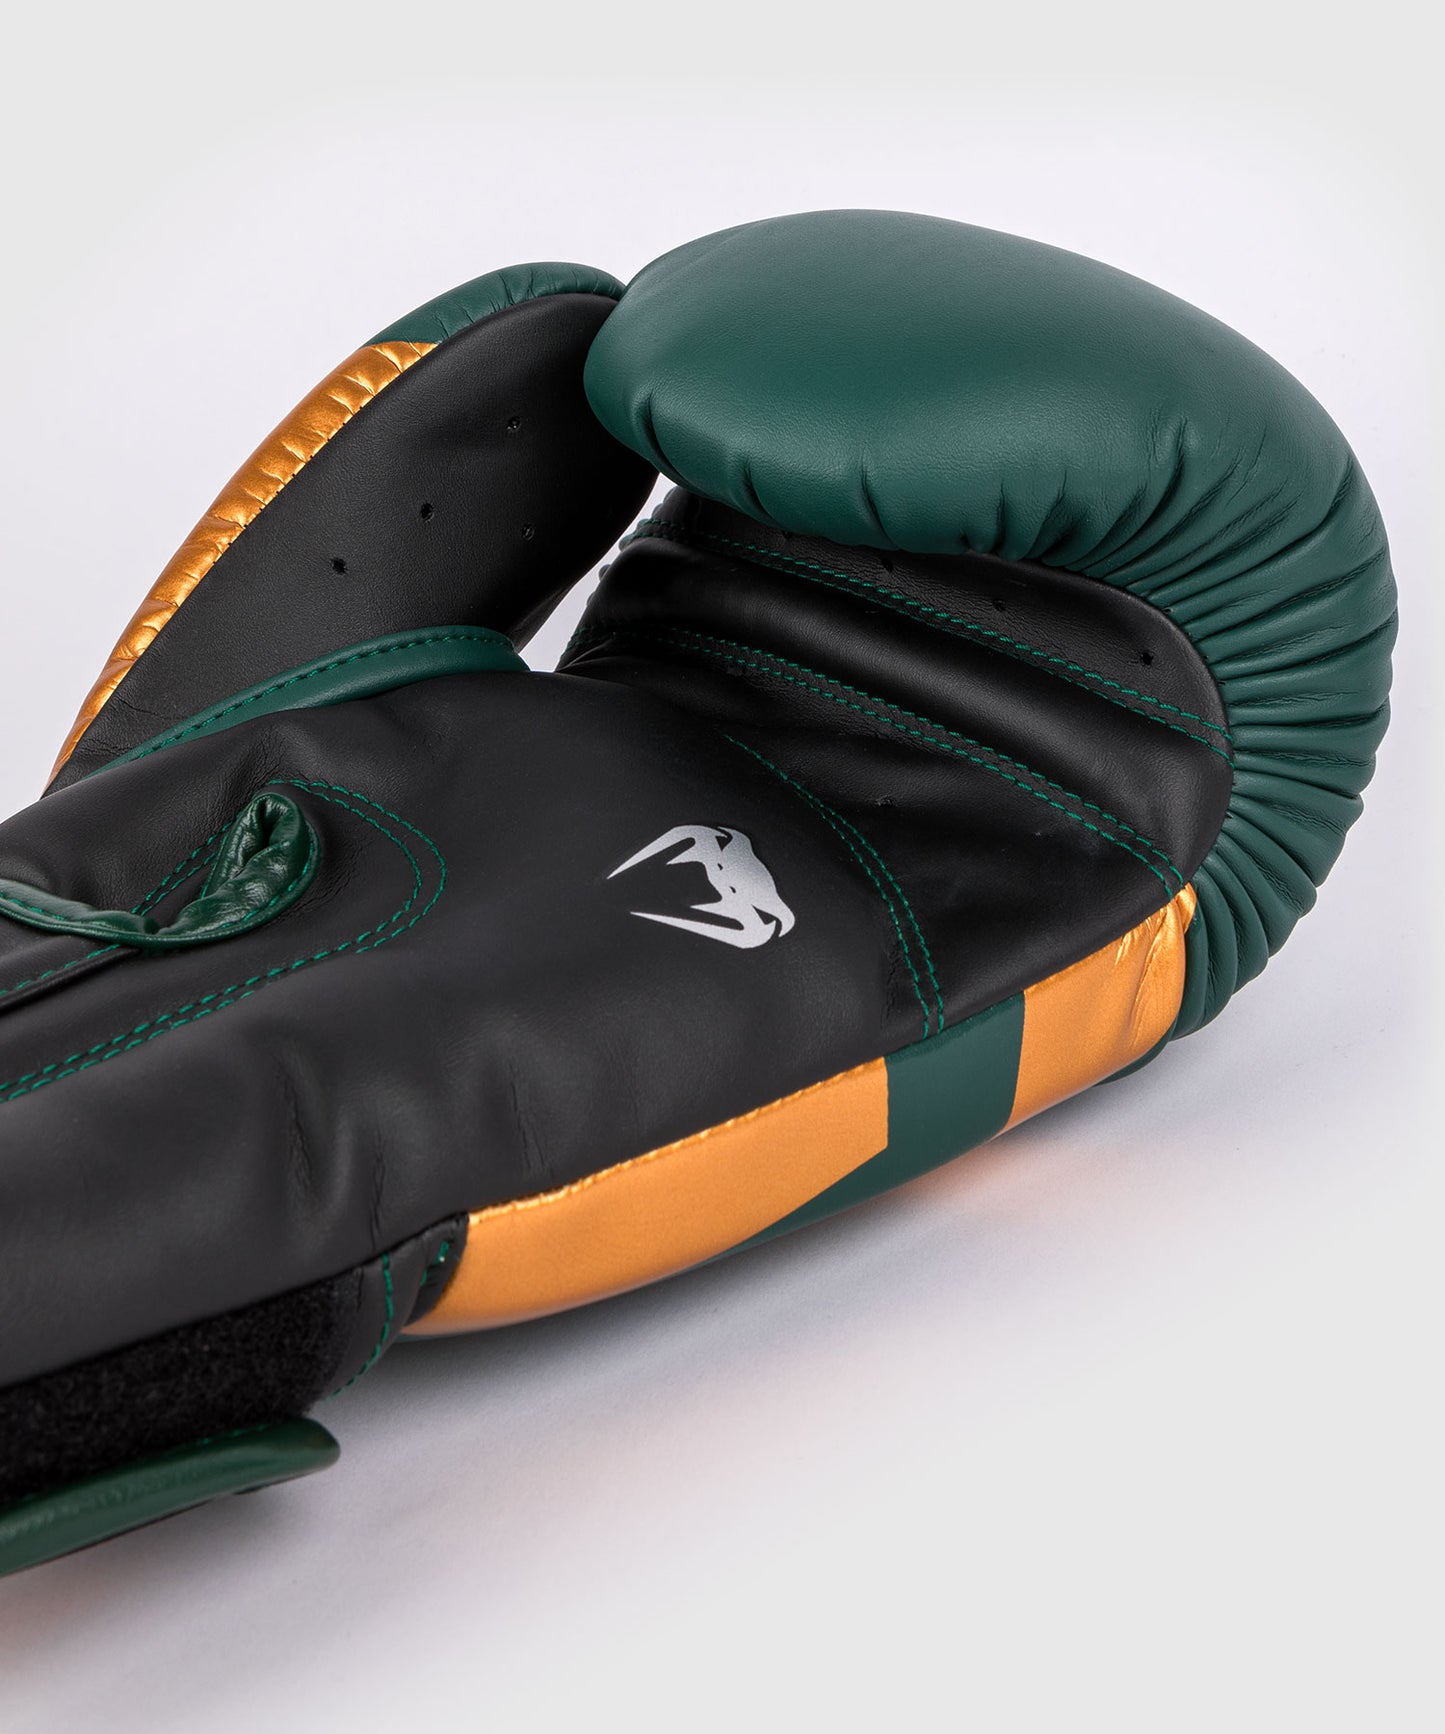 Venum Elite Boxing Gloves - Green/Bronze/Silver